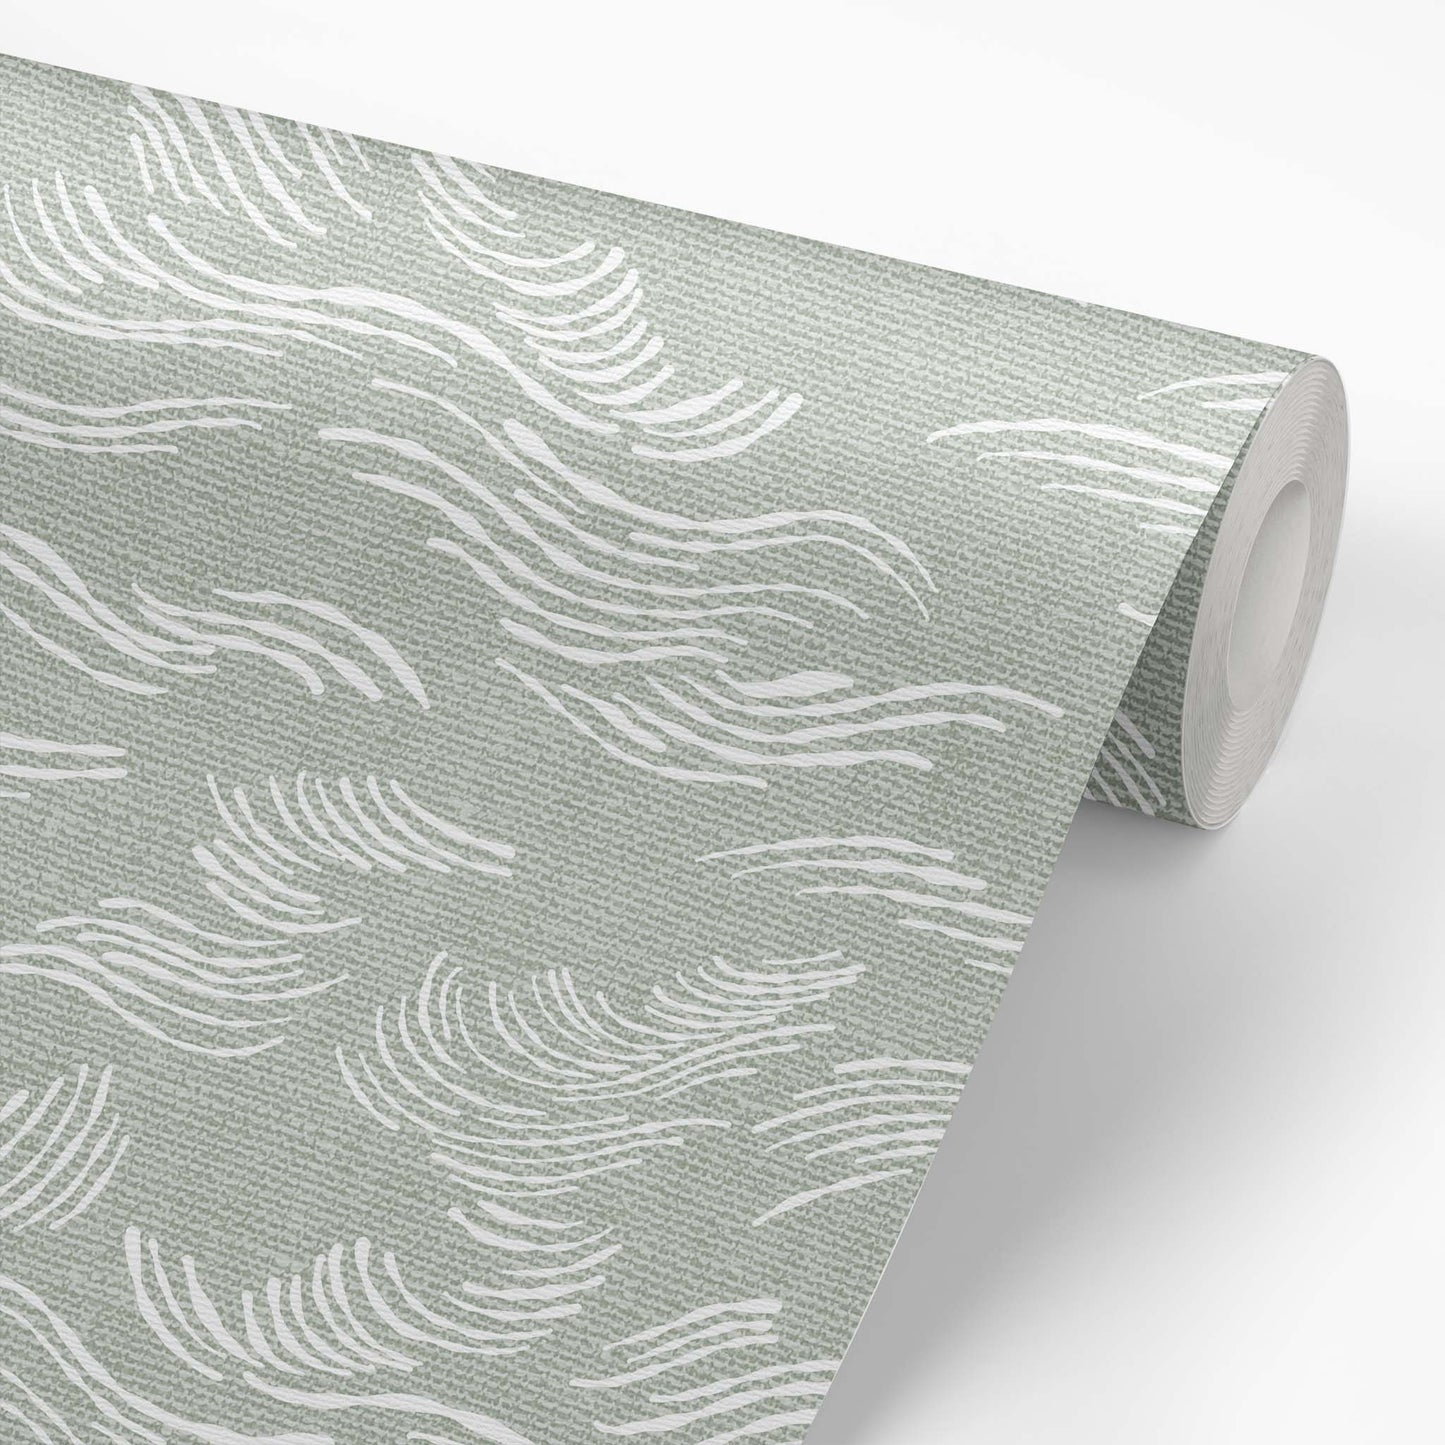 Beach Waves Wallpaper - Sage